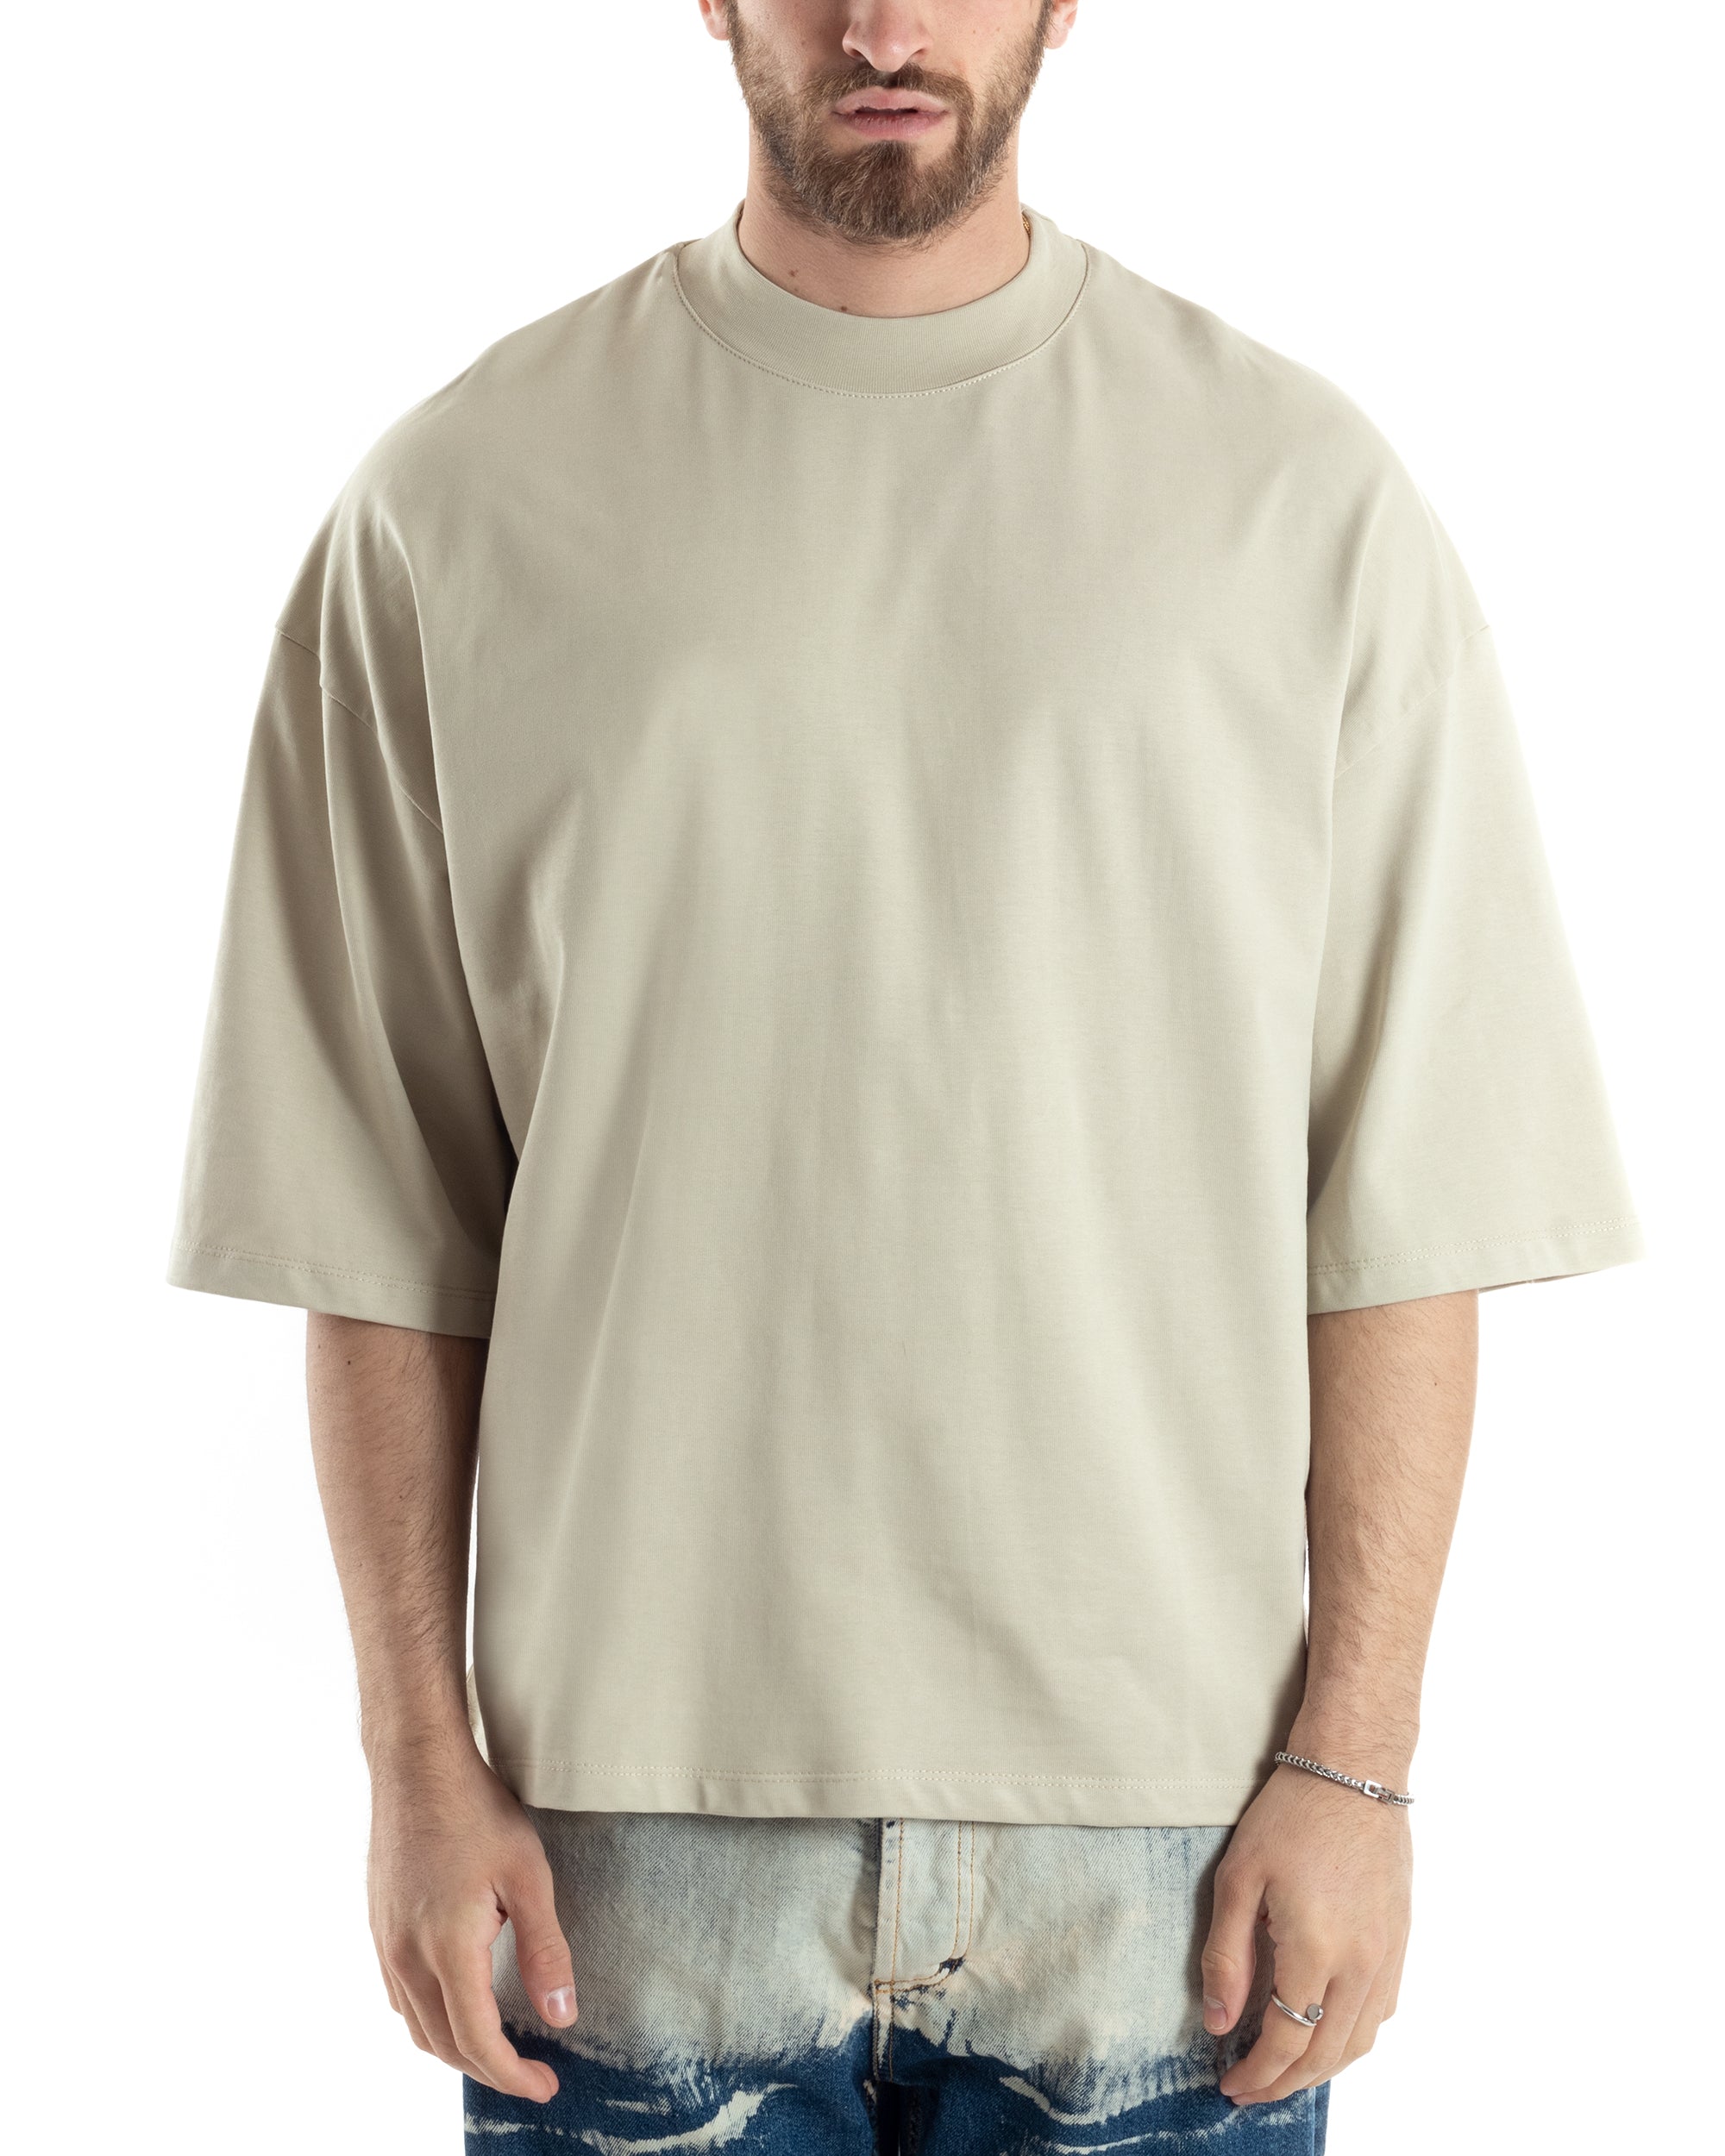 T-shirt Uomo Girocollo Boxy Fit Oversize Cotone Spalla Scesa Gola Alta Casual Basic Beige GIOSAL-TS3022A